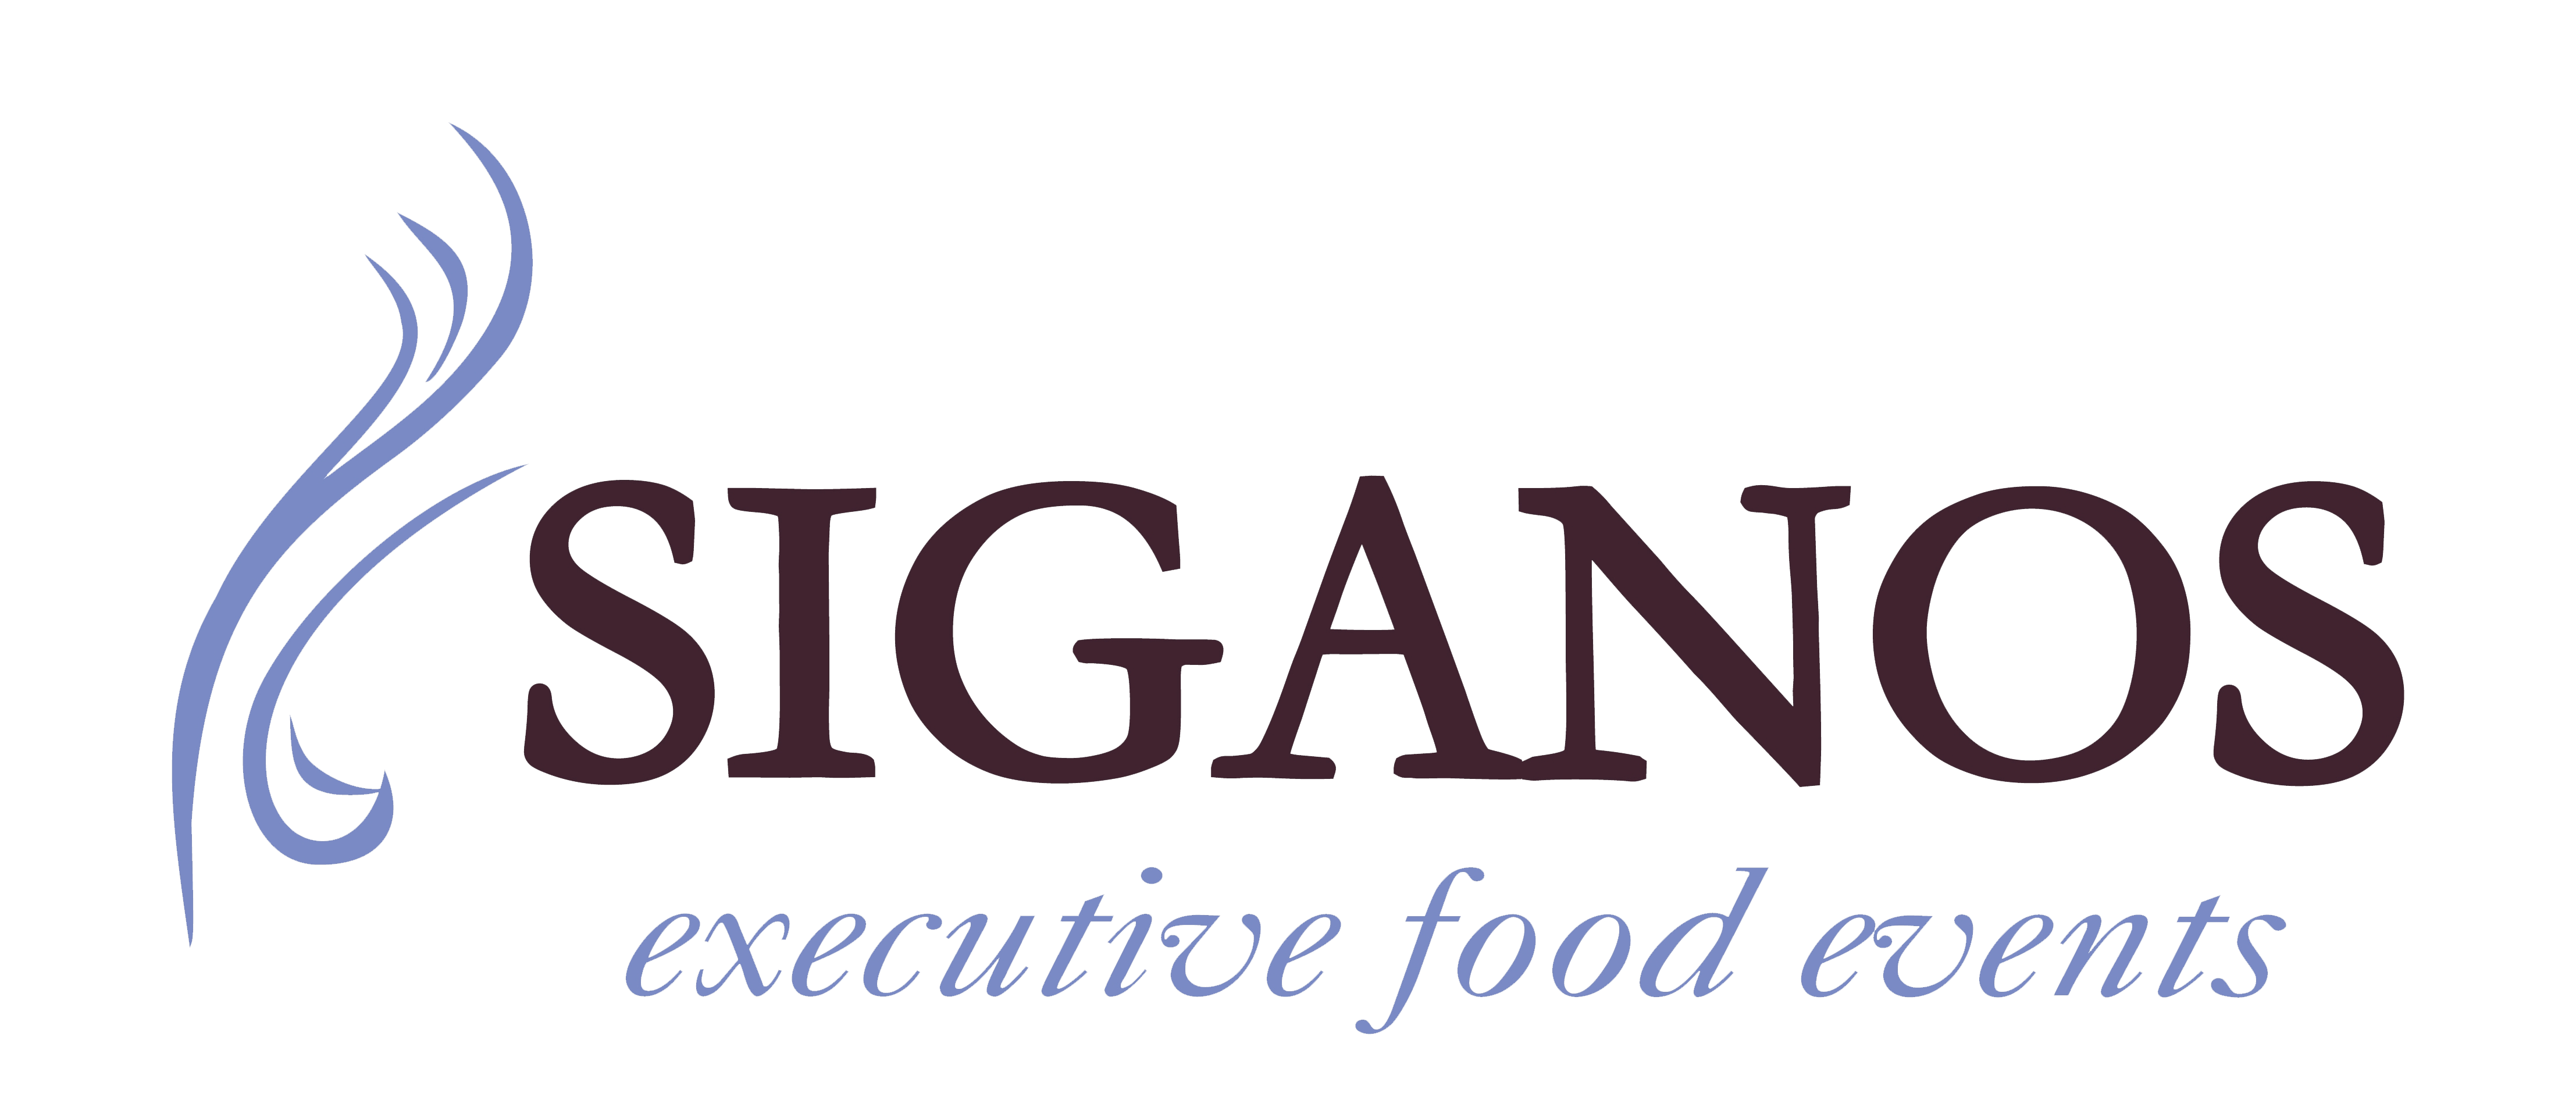 Siganos Executive Food Events